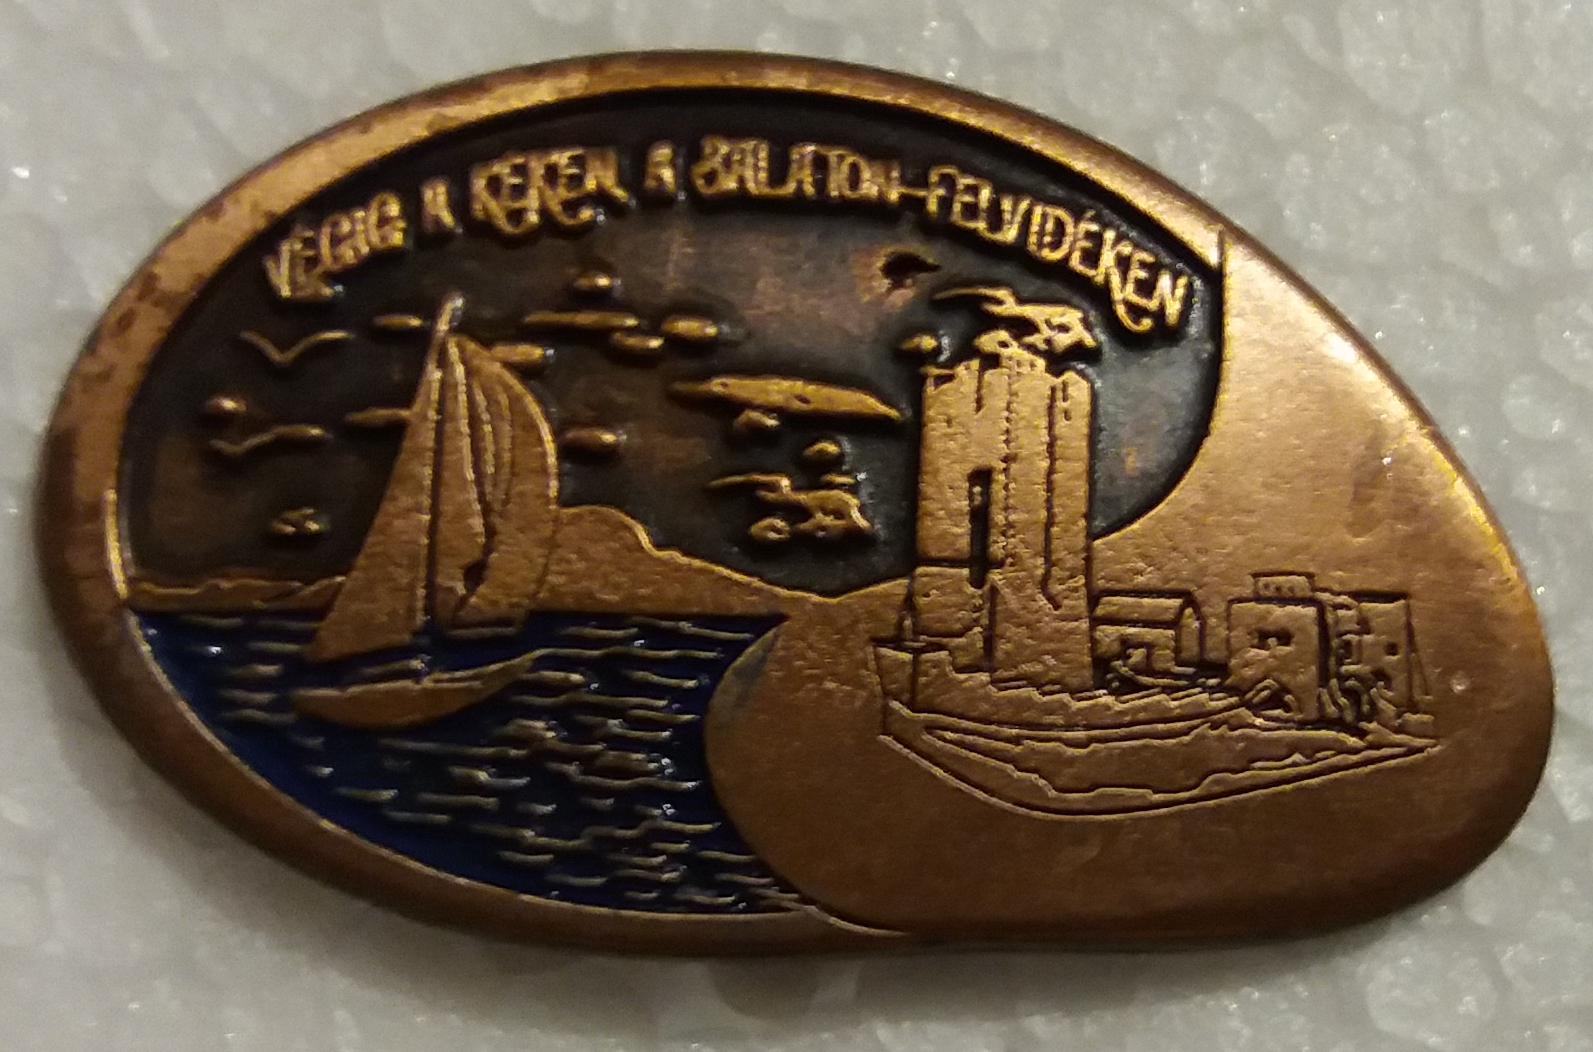 The badge of the movement named Along the Blue Trails of Balaton-felvidék Region